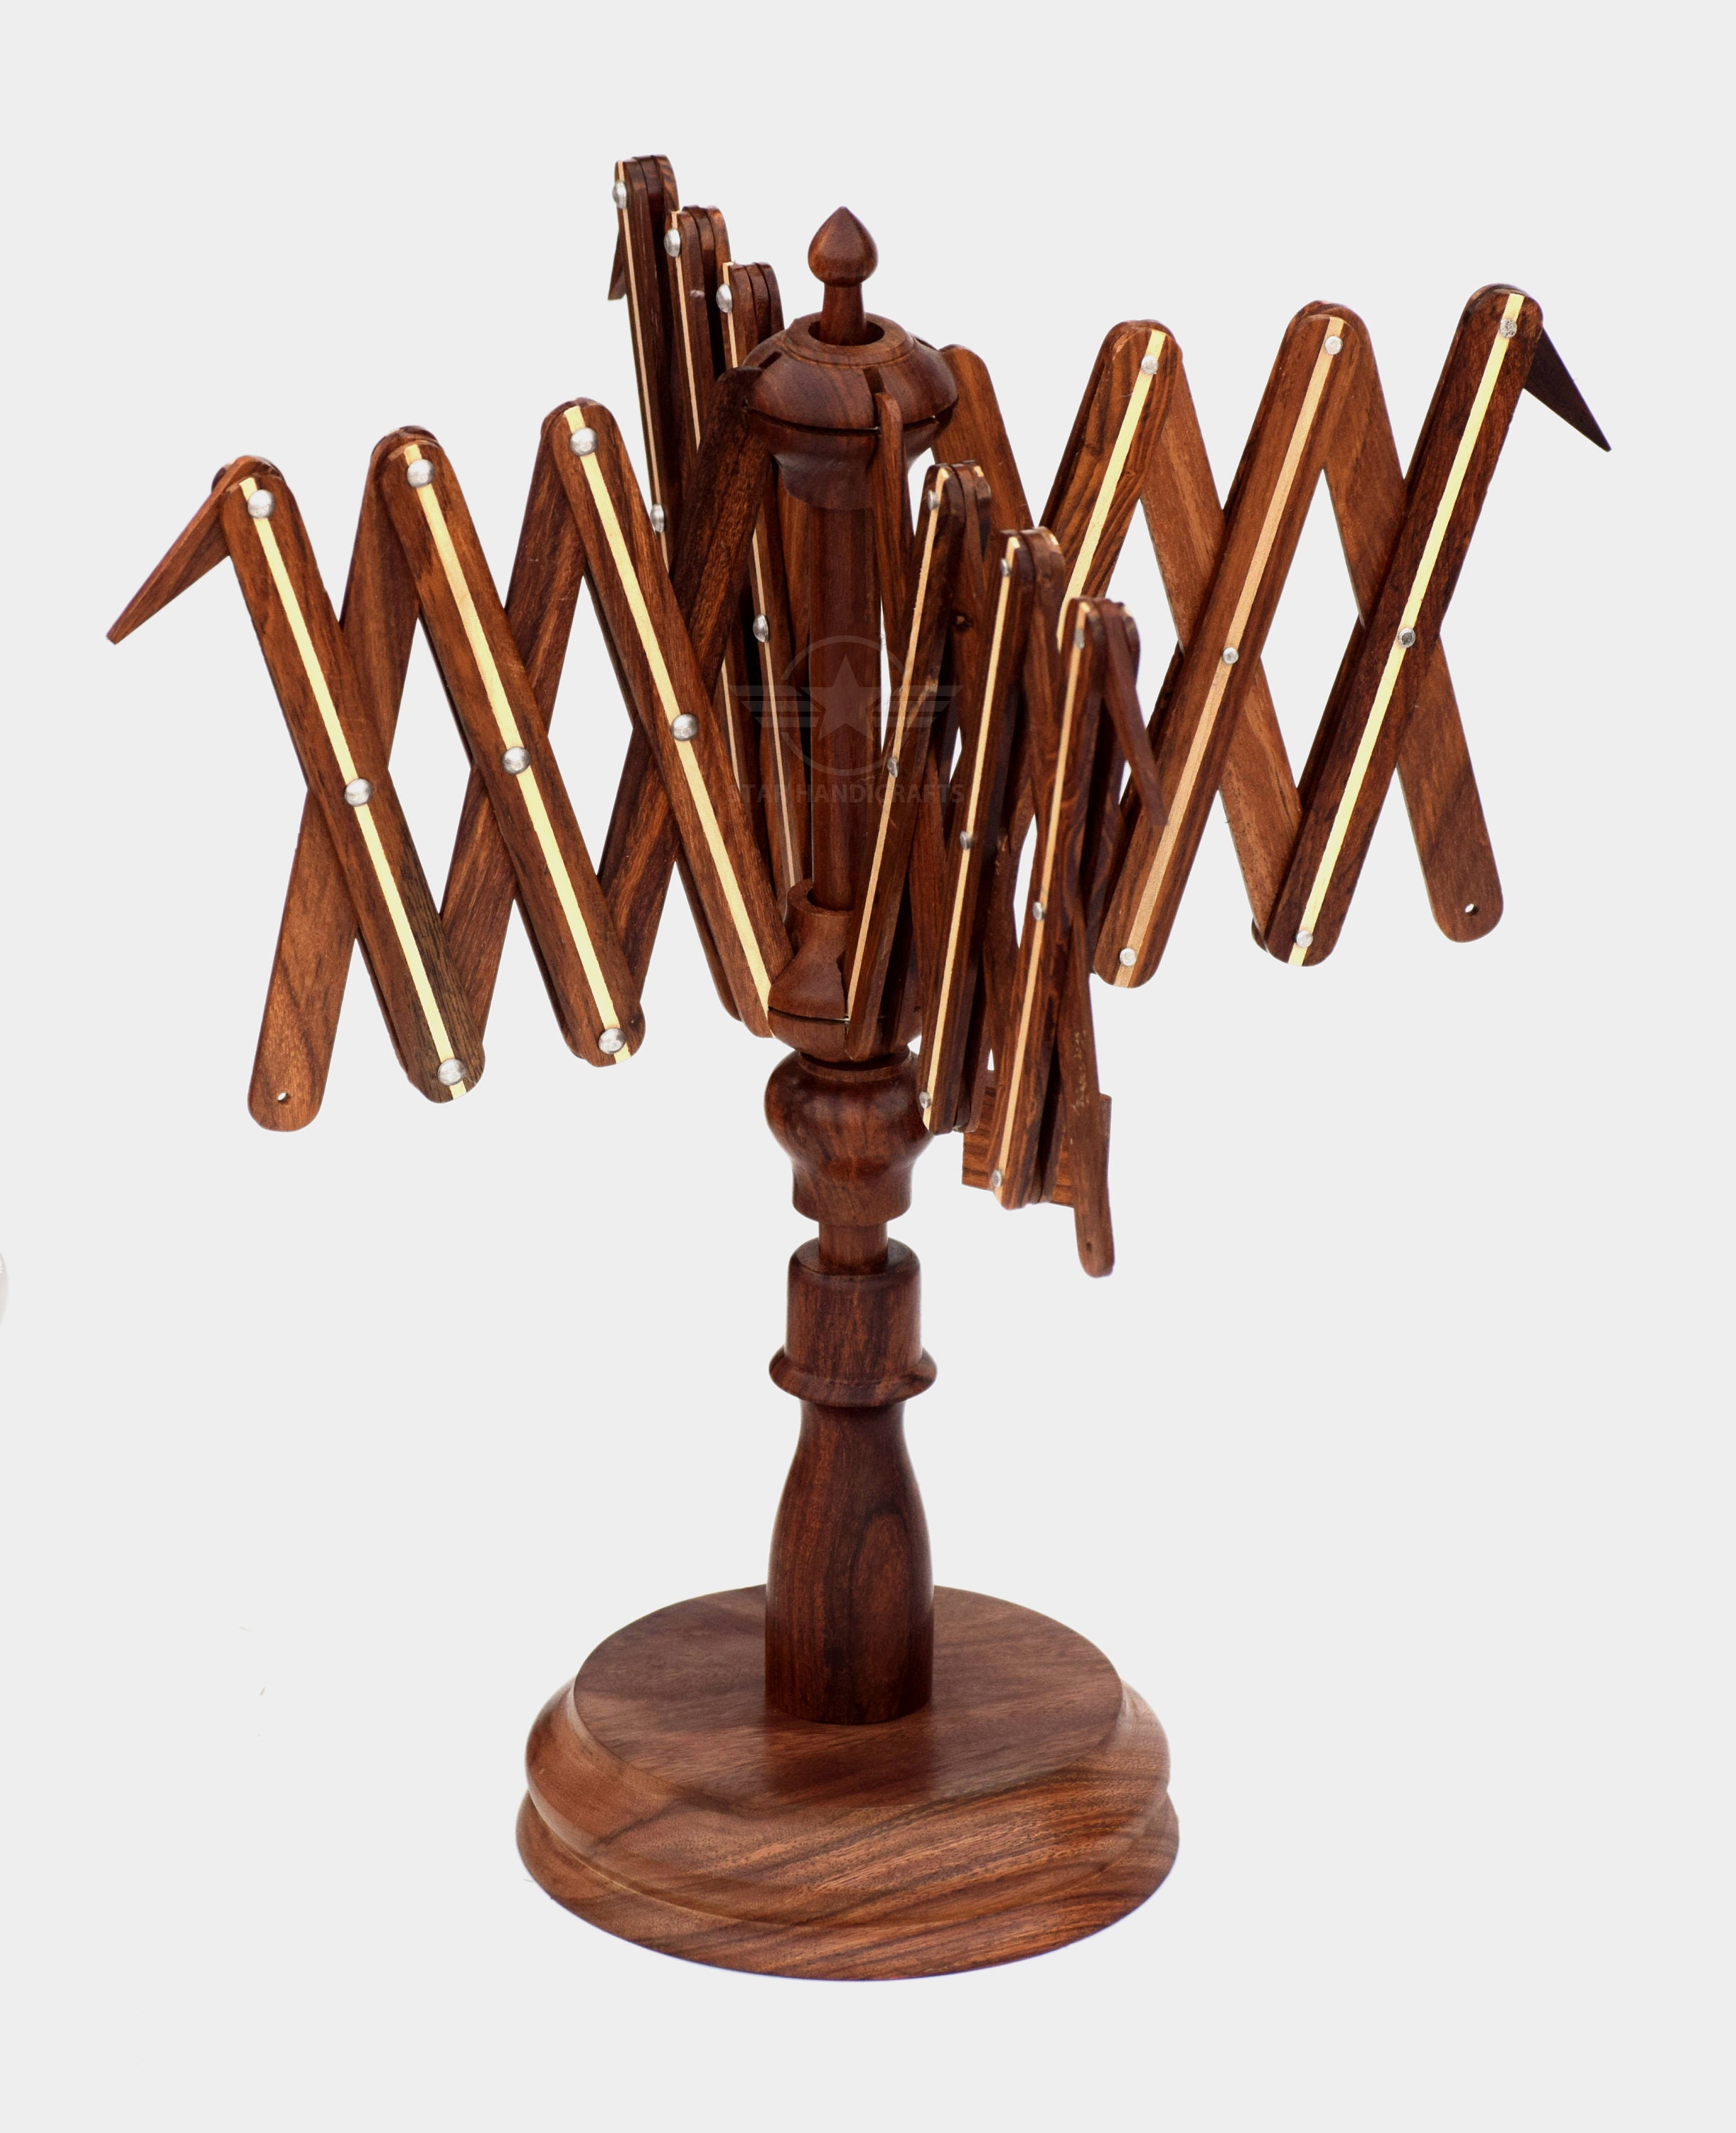  Tijarat handicrafts Wooden Yarn Winder & Yarn Swift Umbrella   Large Spinning Winder and Skein Holder Wooden Ball Winder Good Combination  of Antique Color (Large Yarn Swift + Yarn Winder), (YWYS01)